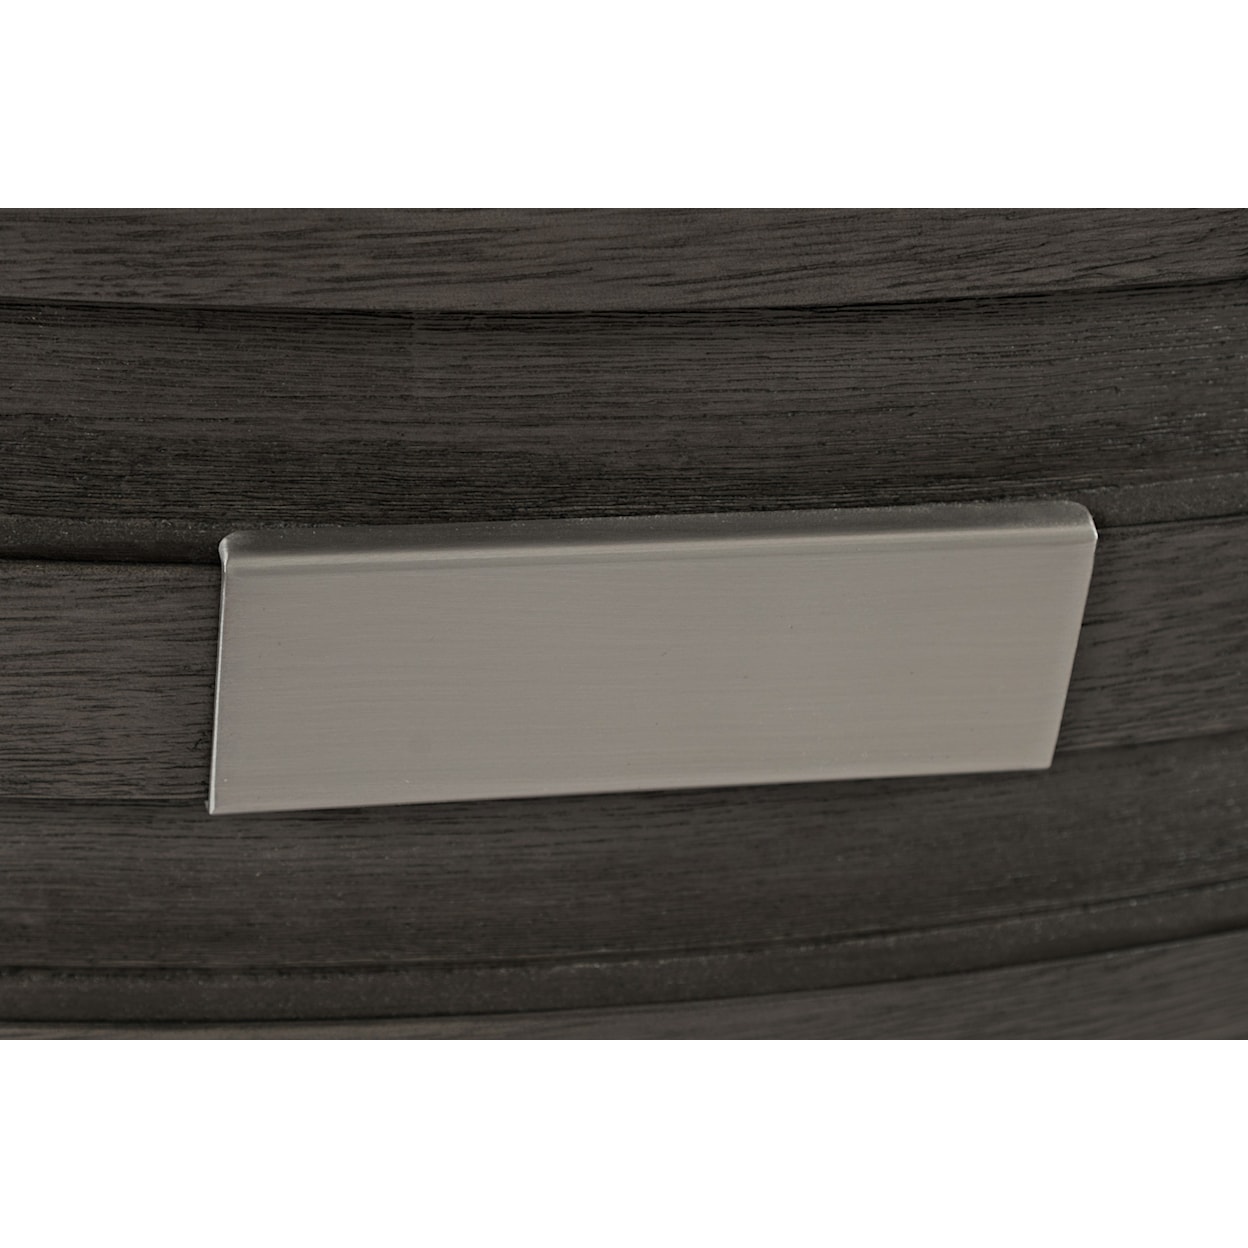 VFM Signature Altamonte - 1850 Upholstered Counter Stool